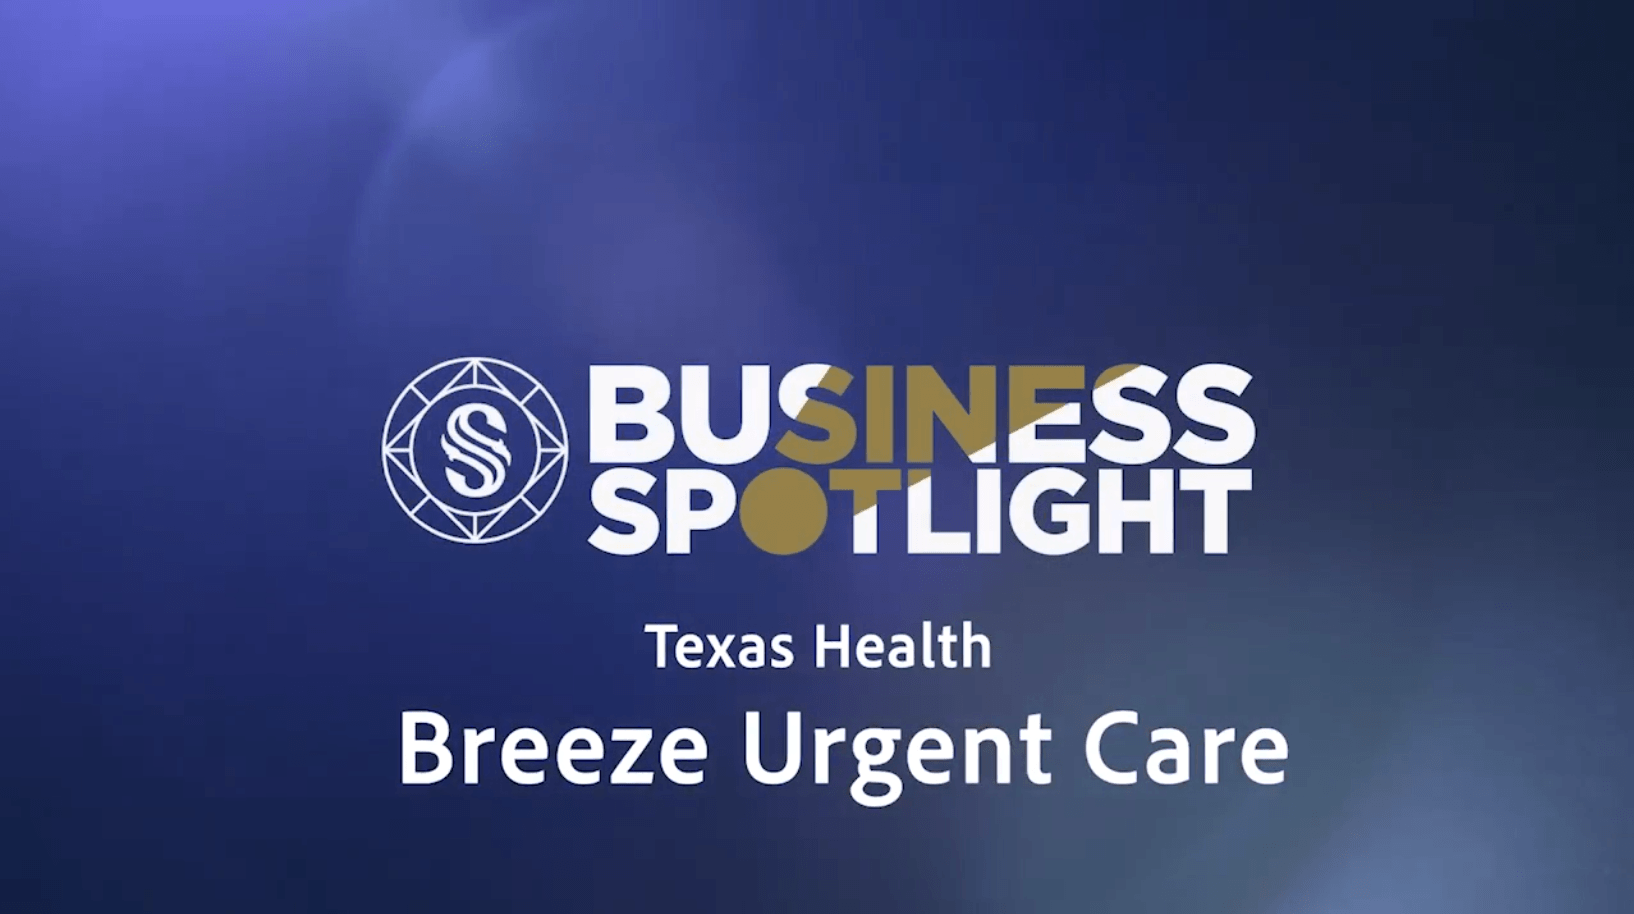 Business Spotlight Texas Health Breeze Urgent Care